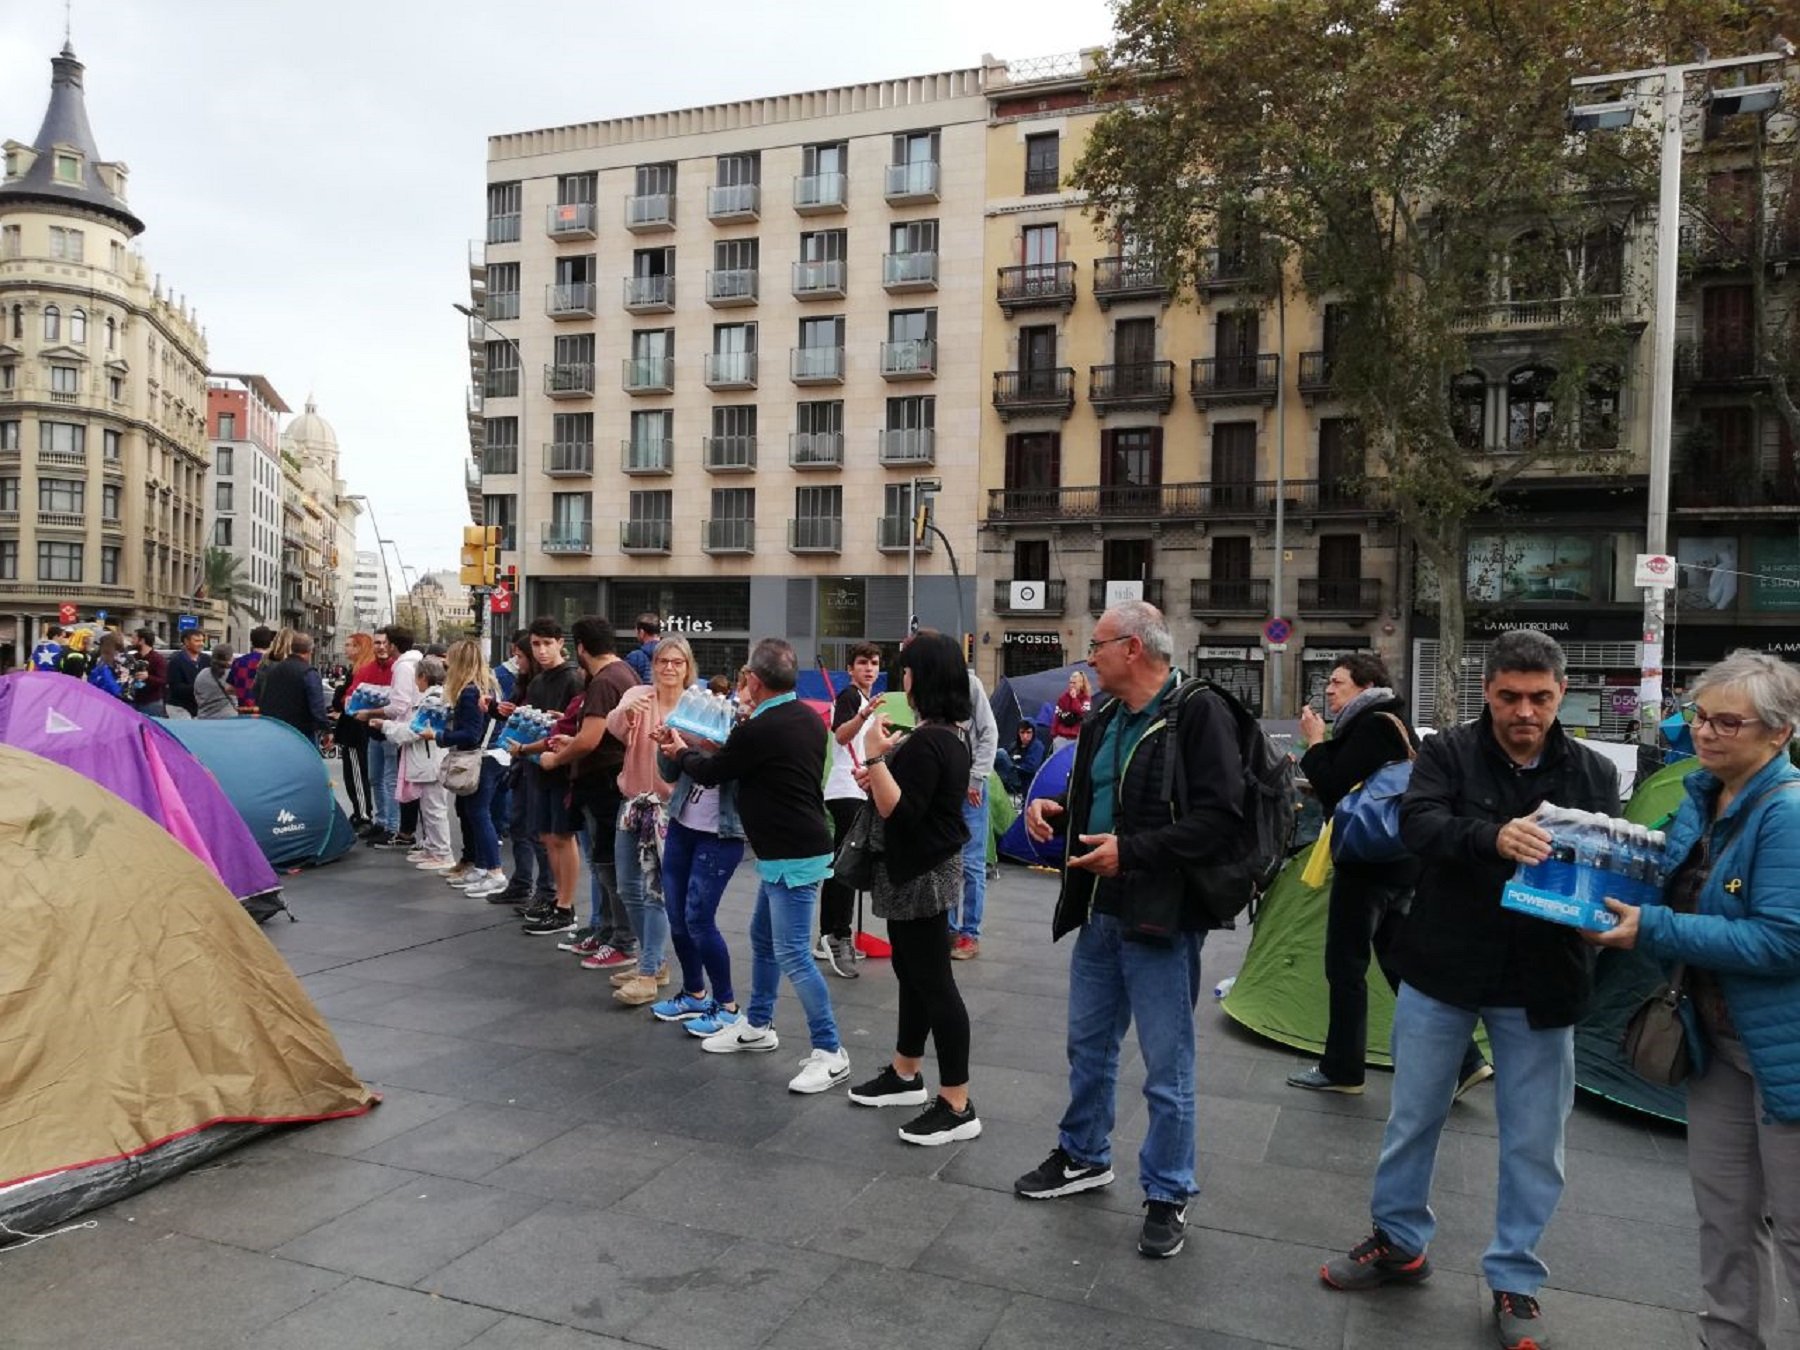 Public support for students' protest camp in Barcelona's plaça Universitat